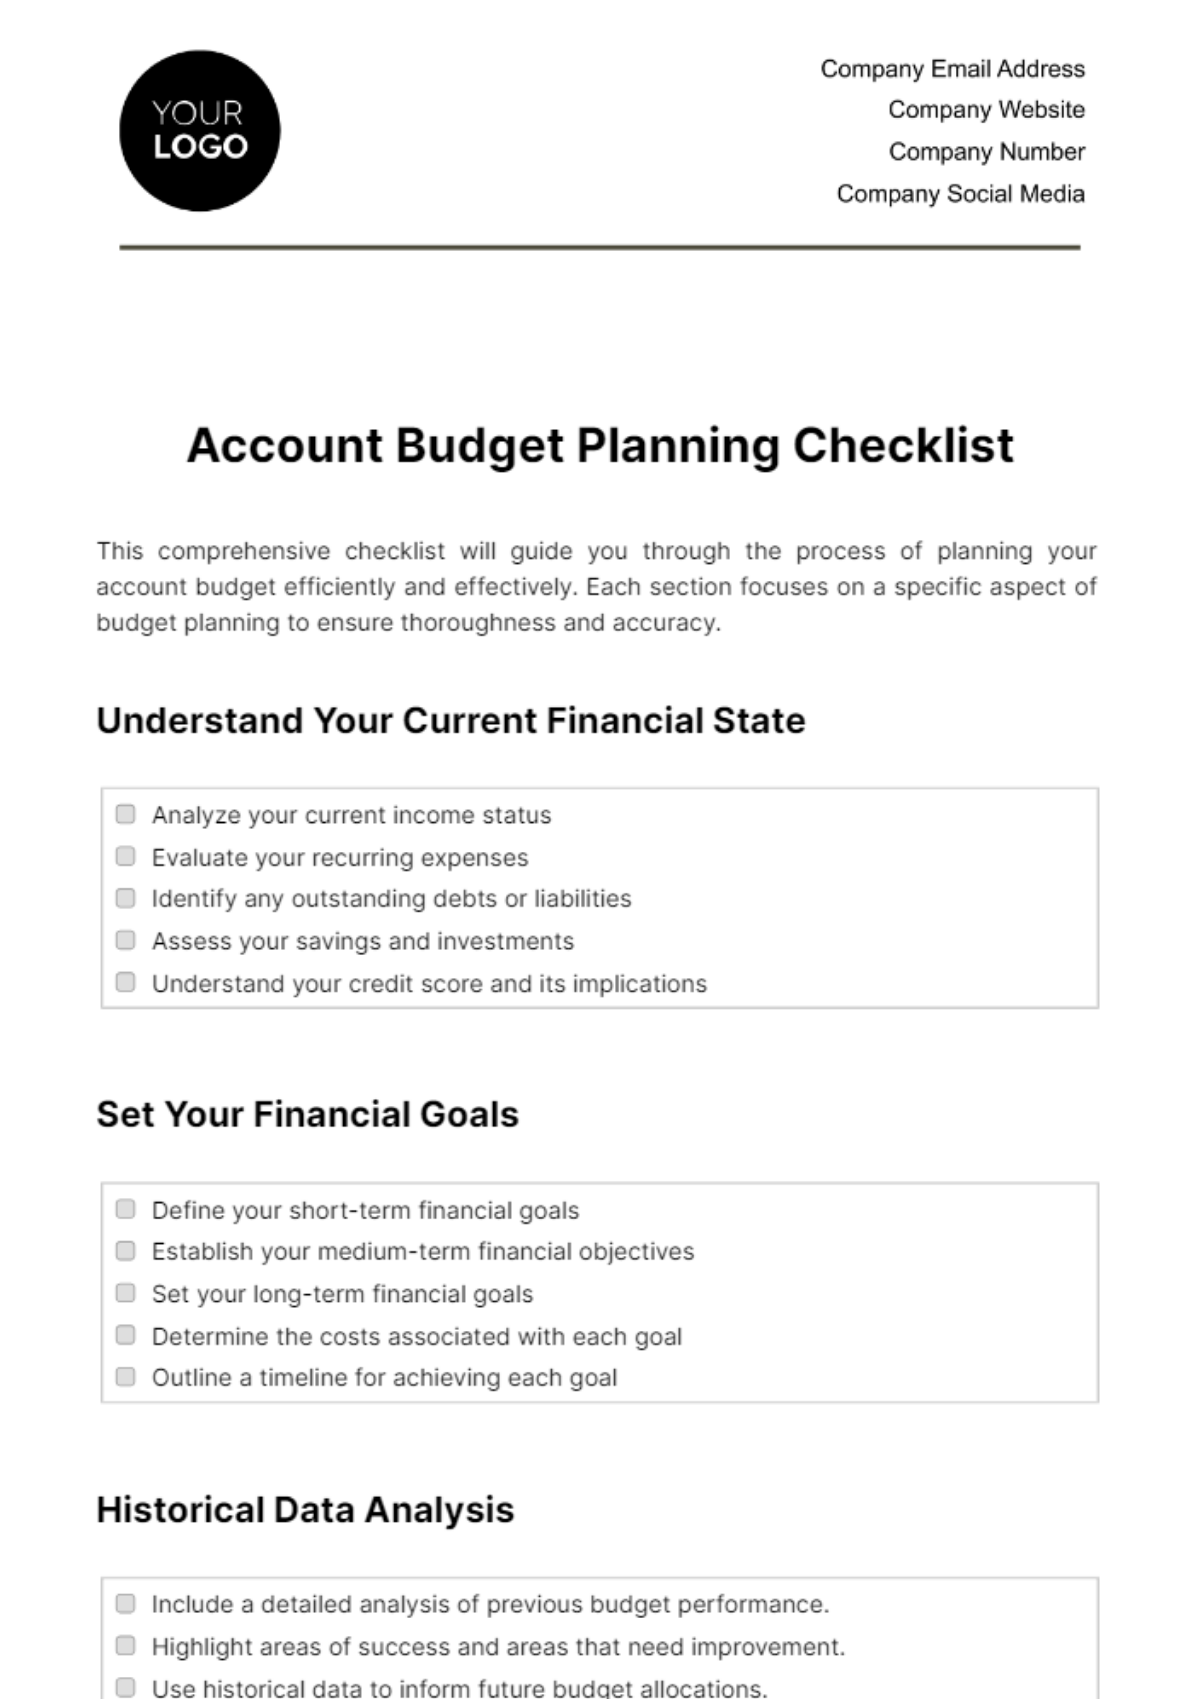 Account Budget Planning Checklist Template